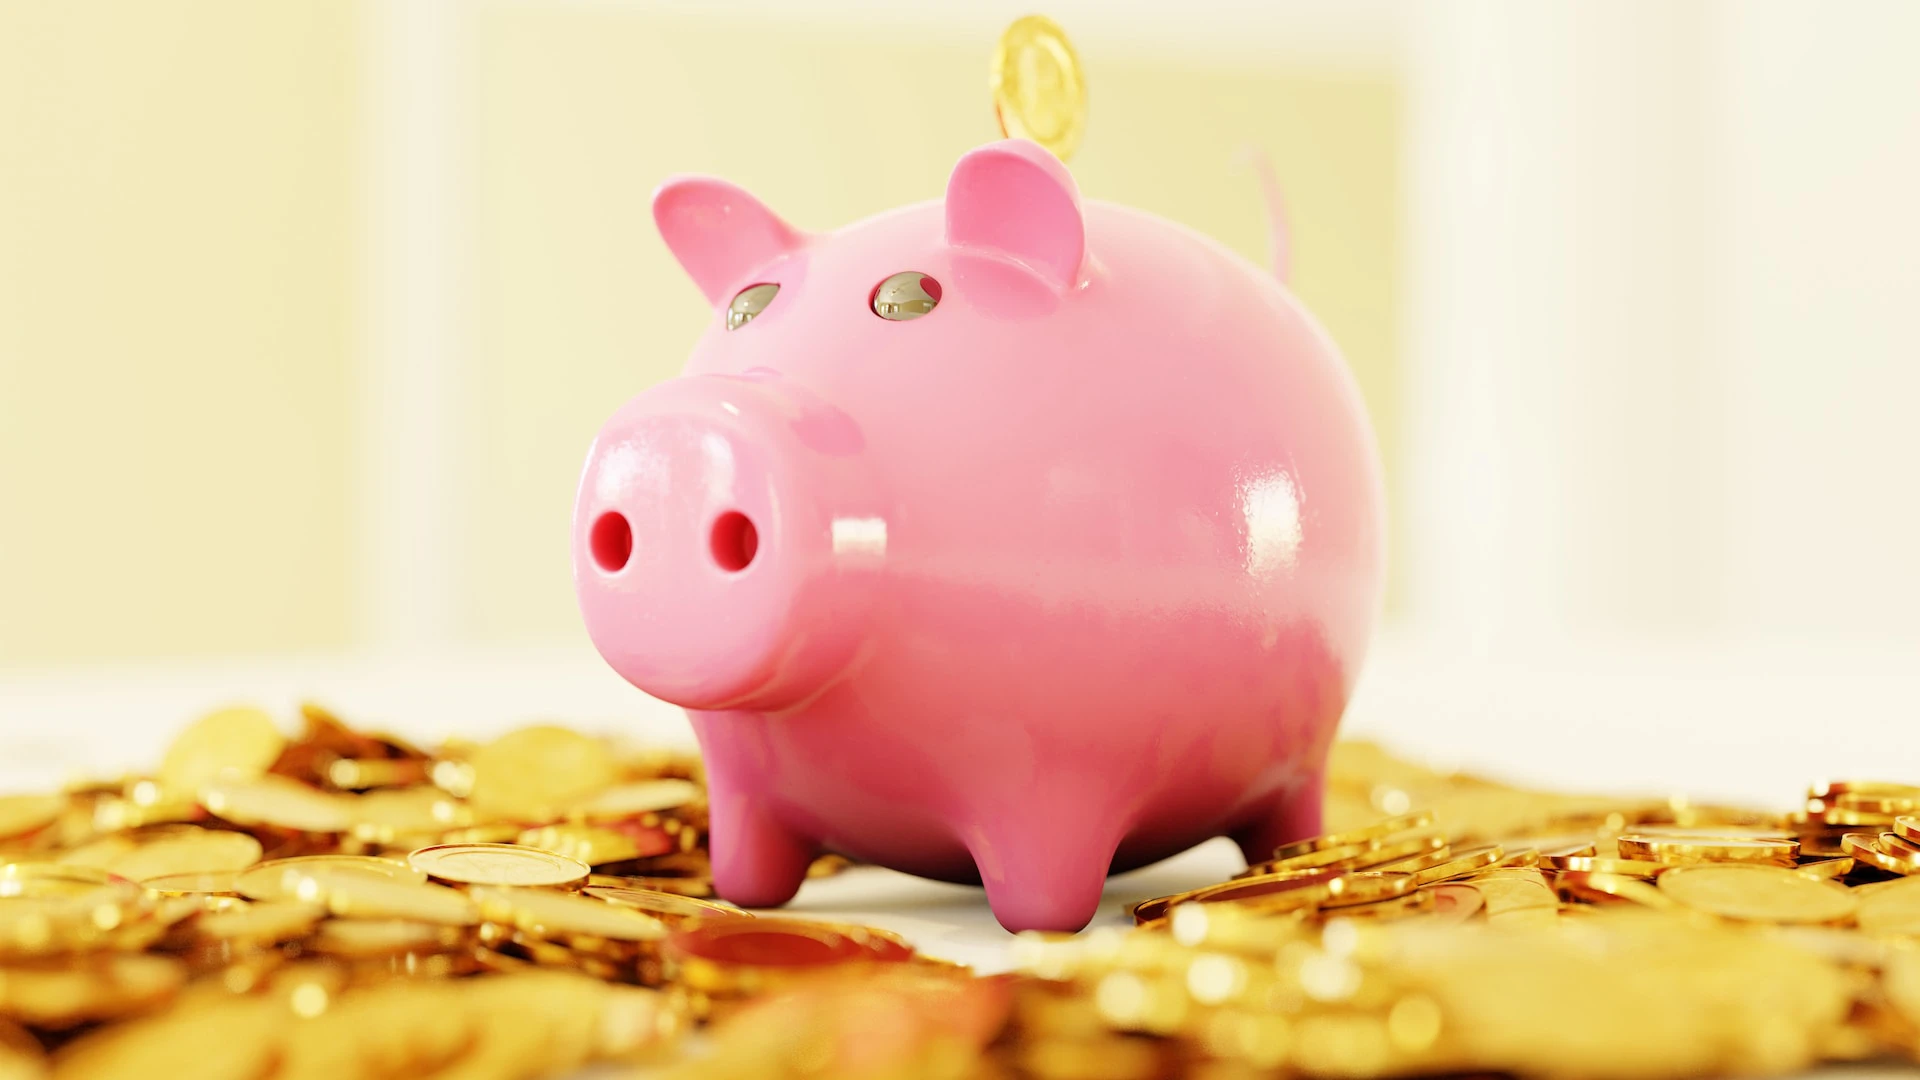 pink piggy bank sitting amongst gold coins